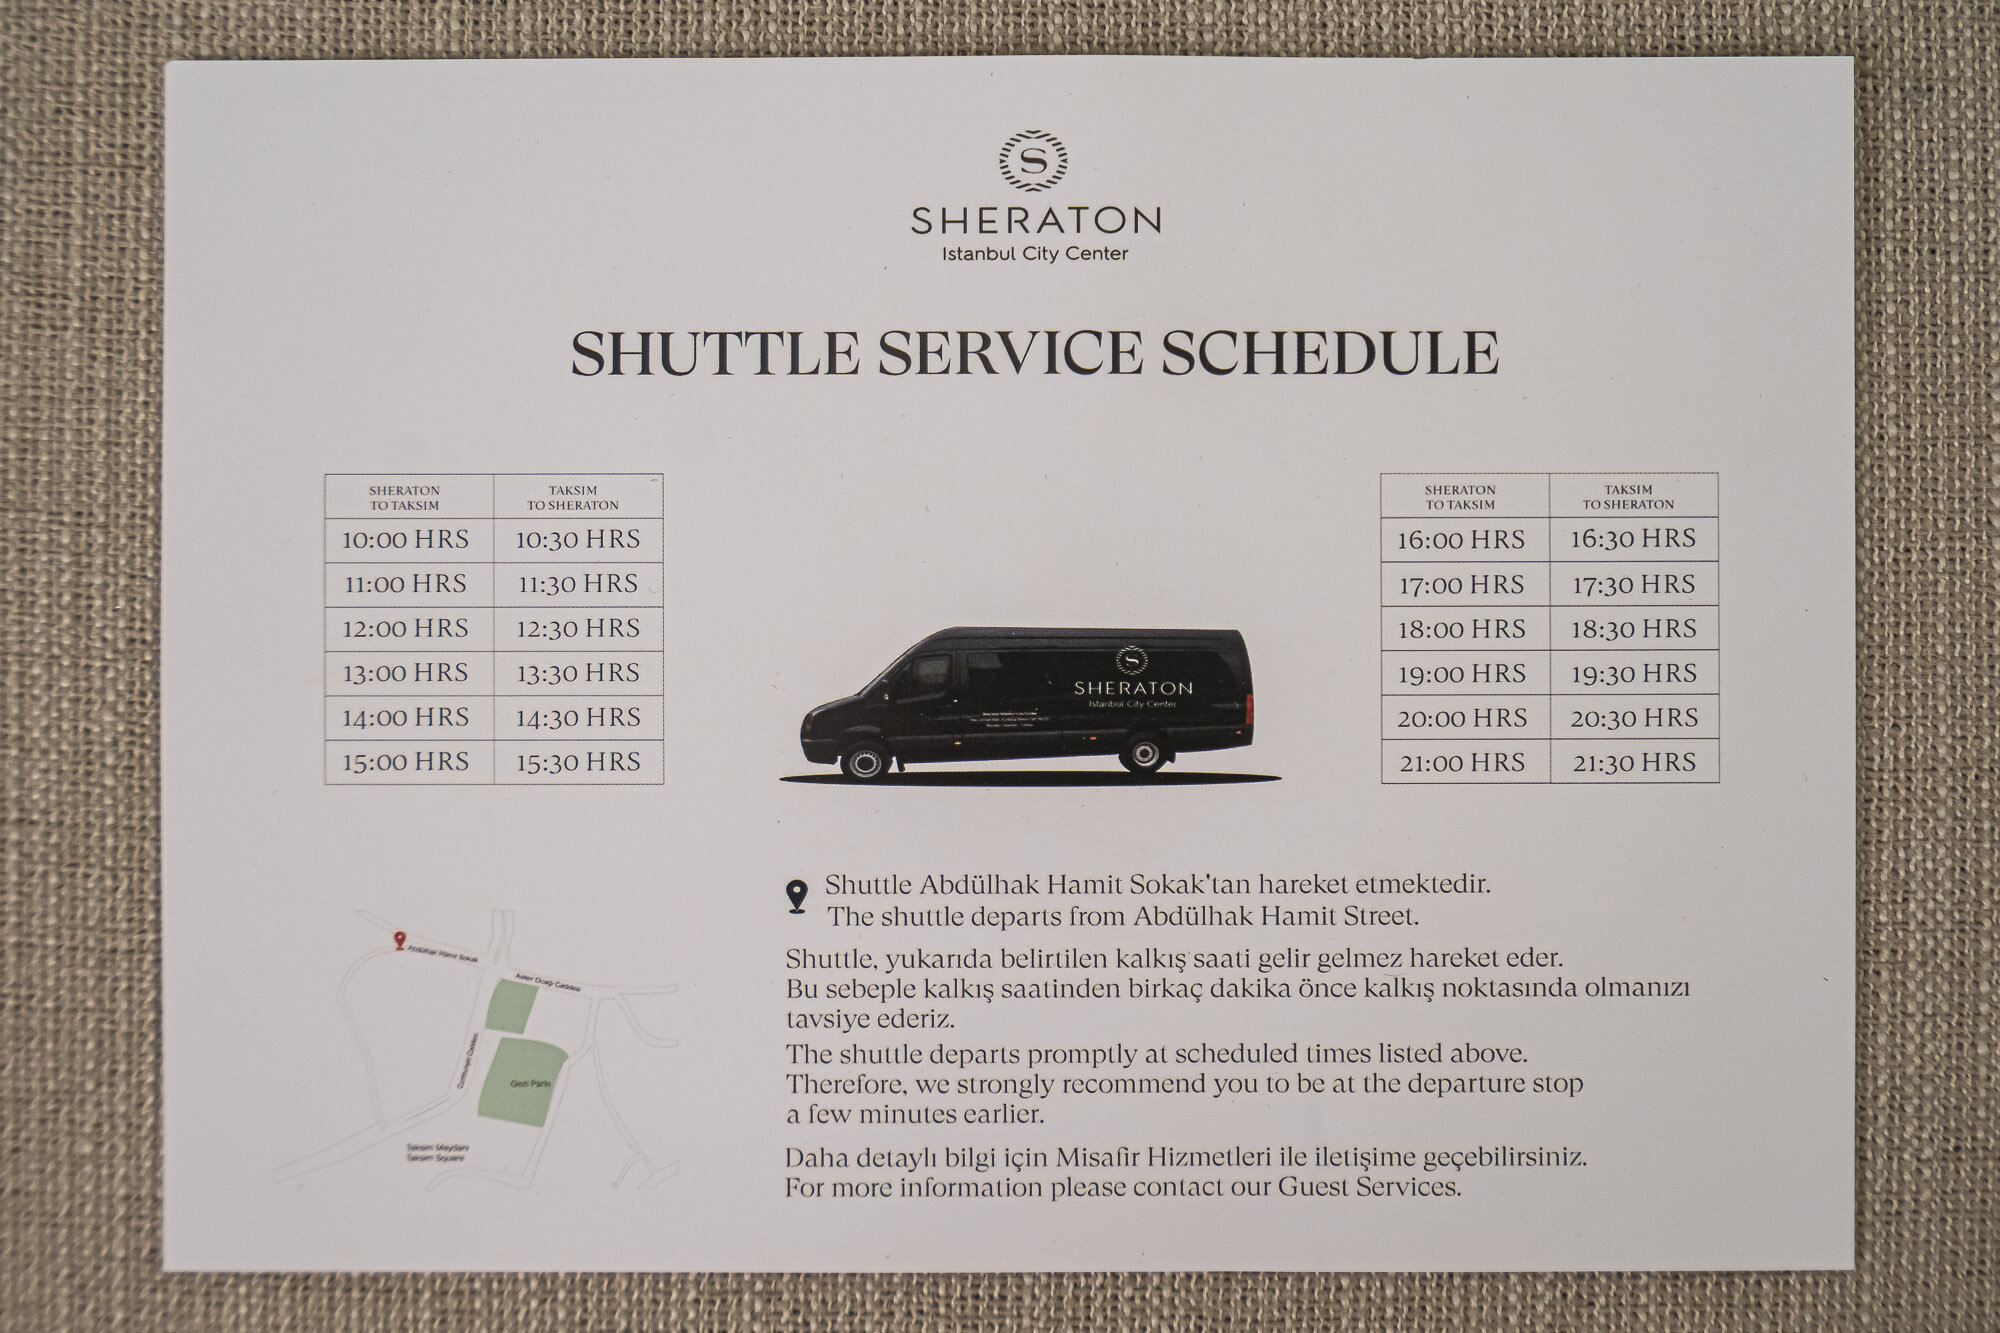 Shuttle service schedule